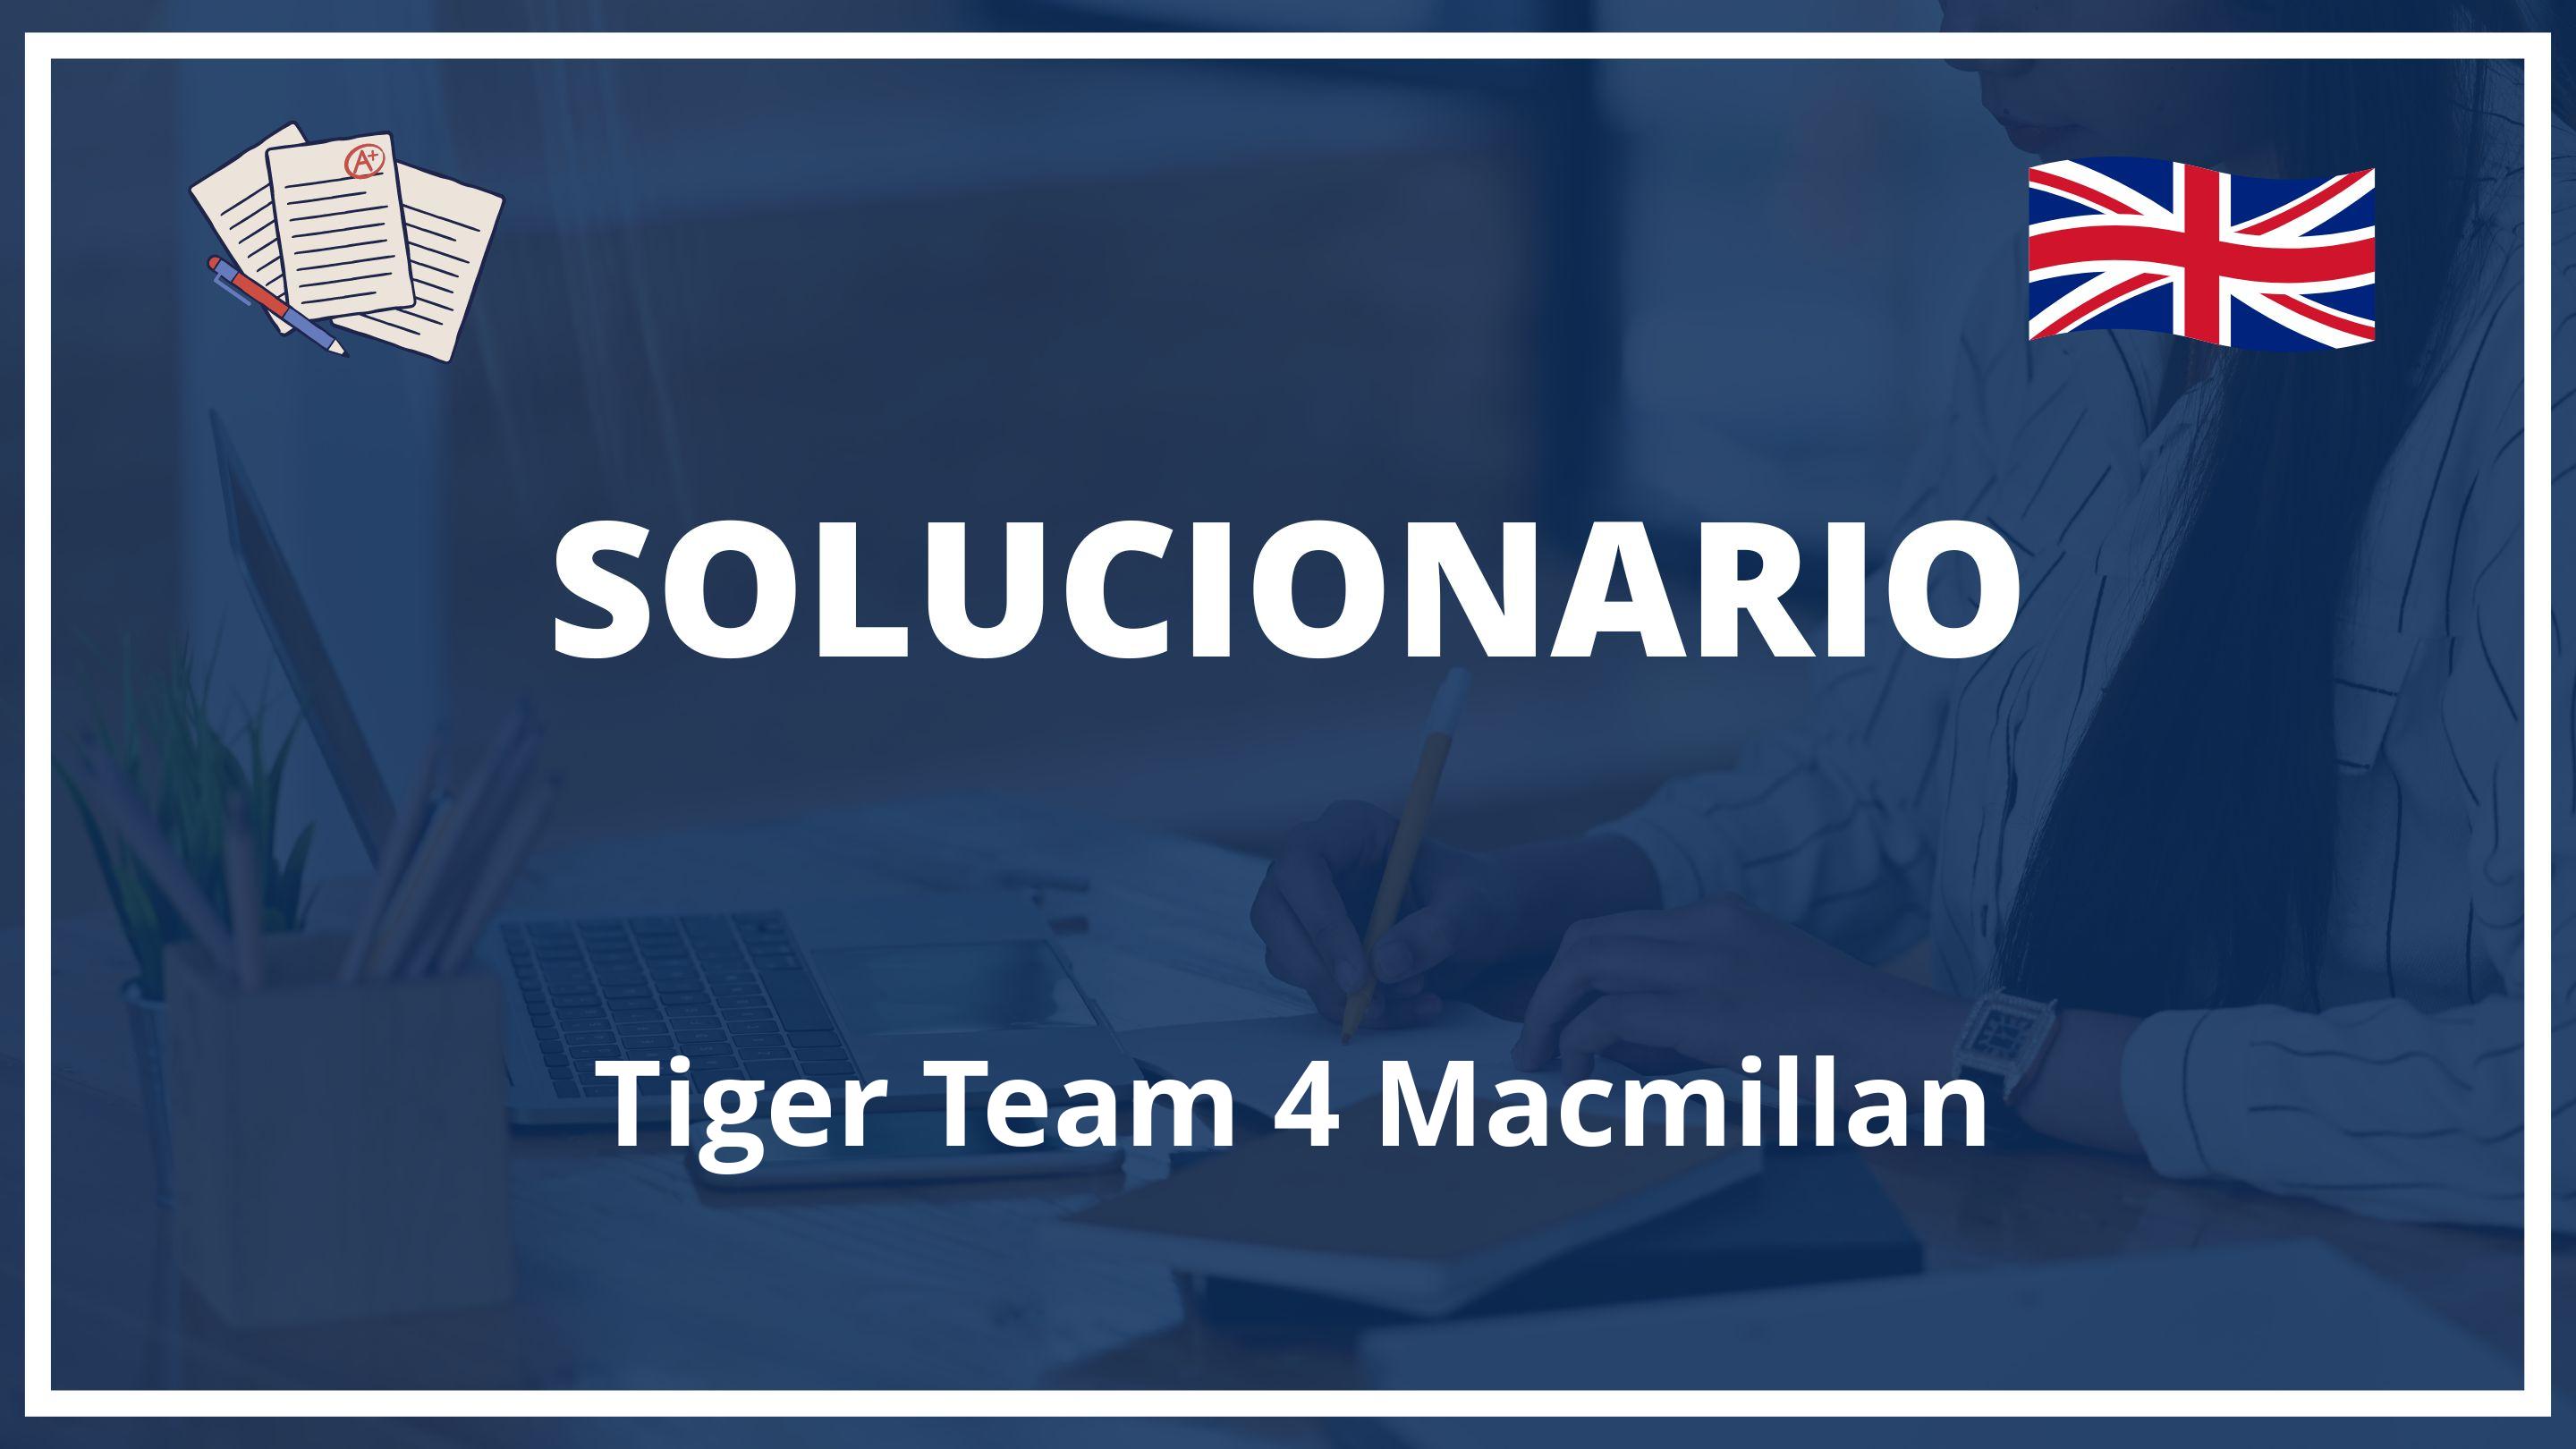 Tiger Team 4 Macmillan